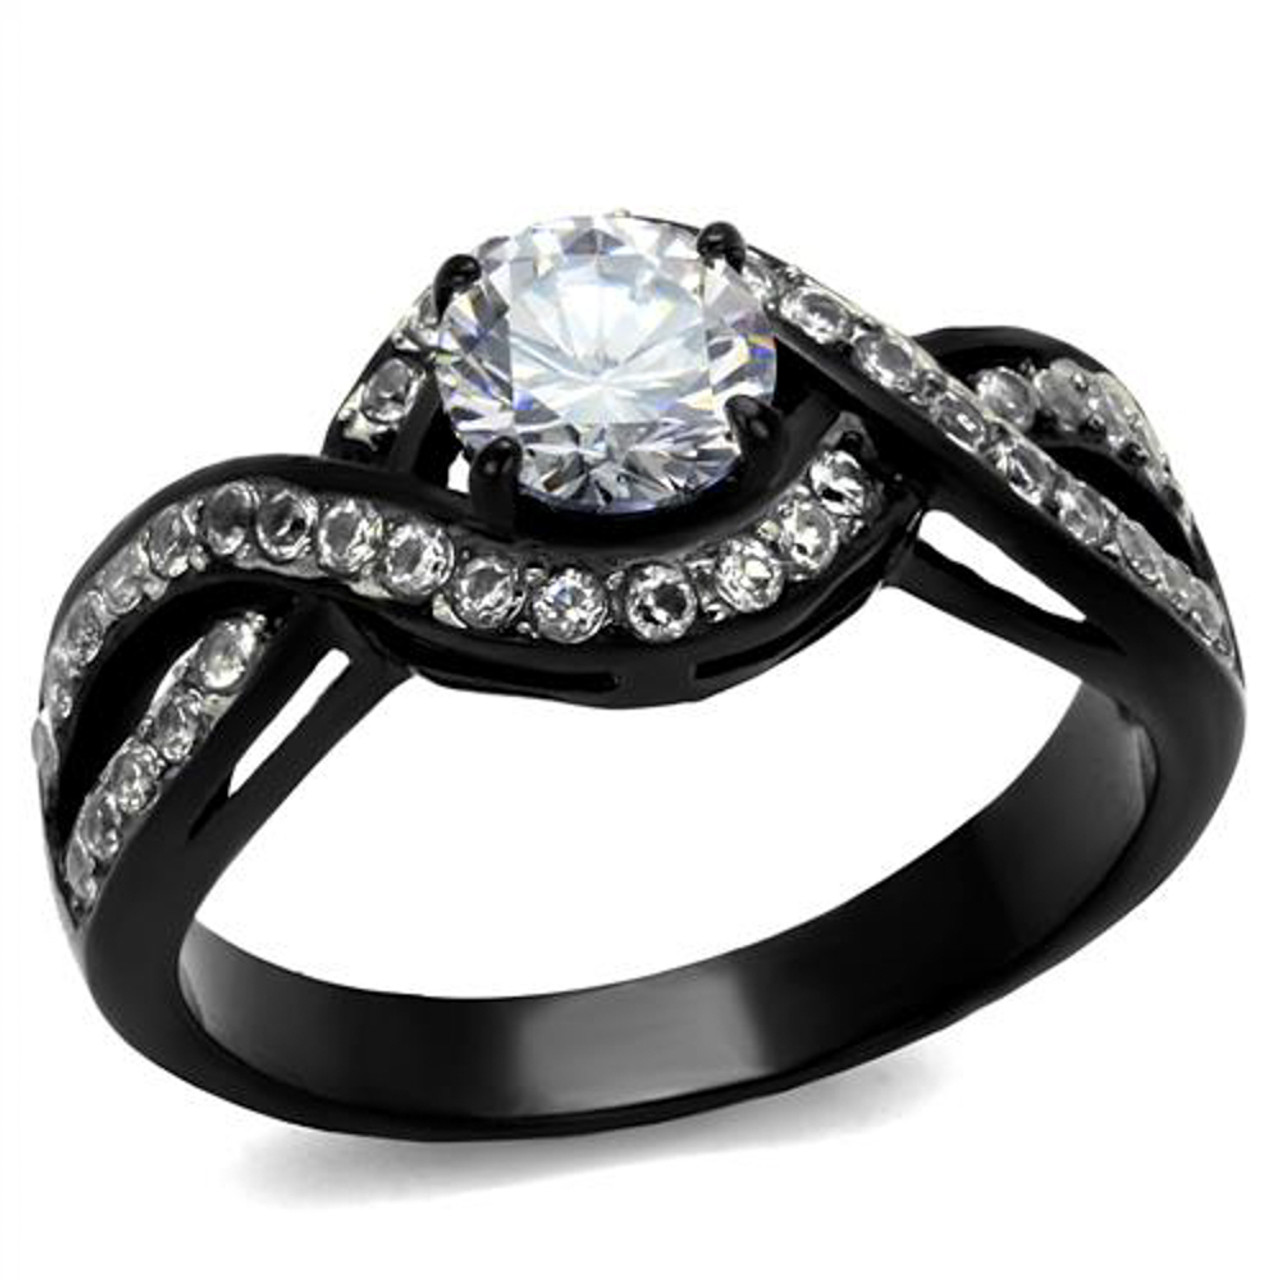 Black Stainless Steel Engagement Rings